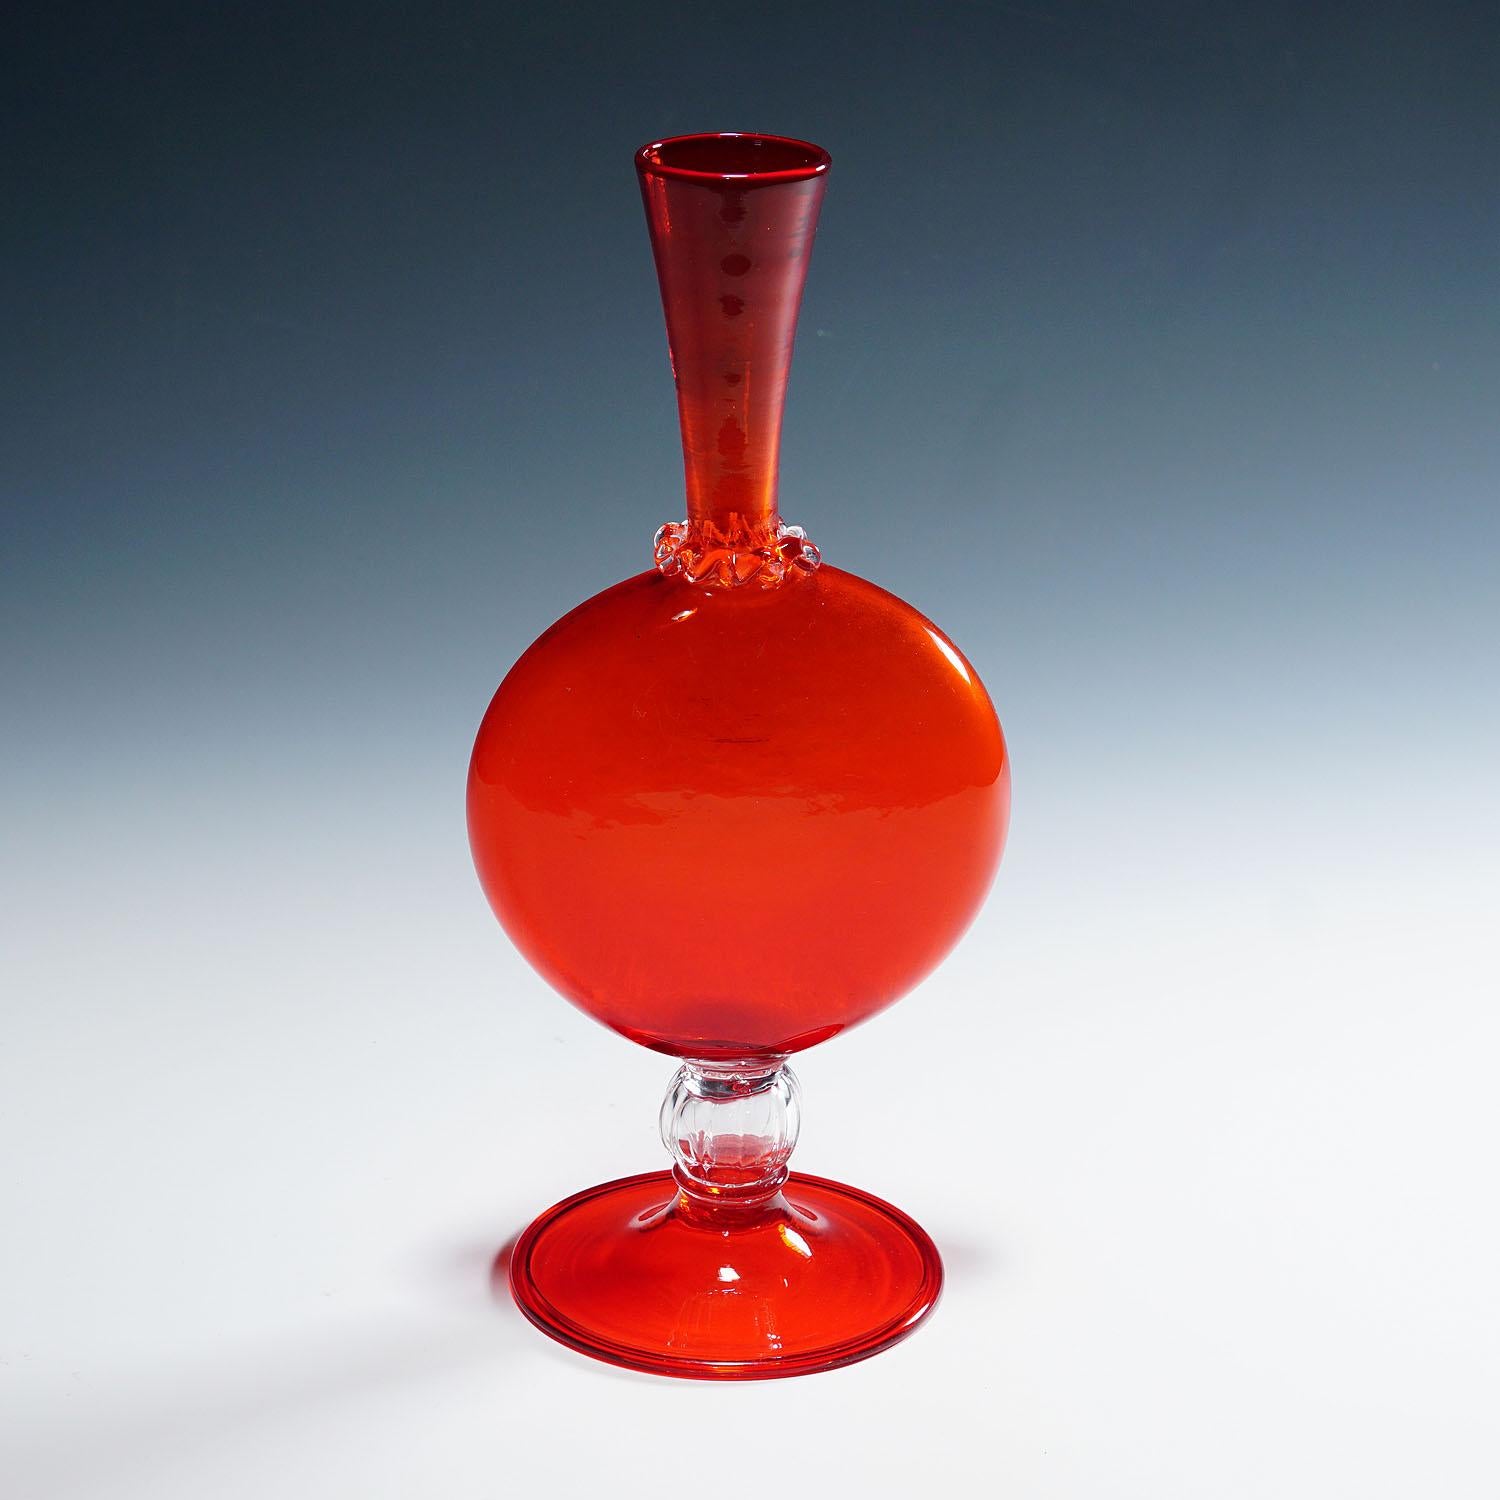 Vase en verre Vetro Soffiato de Vittorio Zecchin pour Venini Murano, vers 1950

Vase 